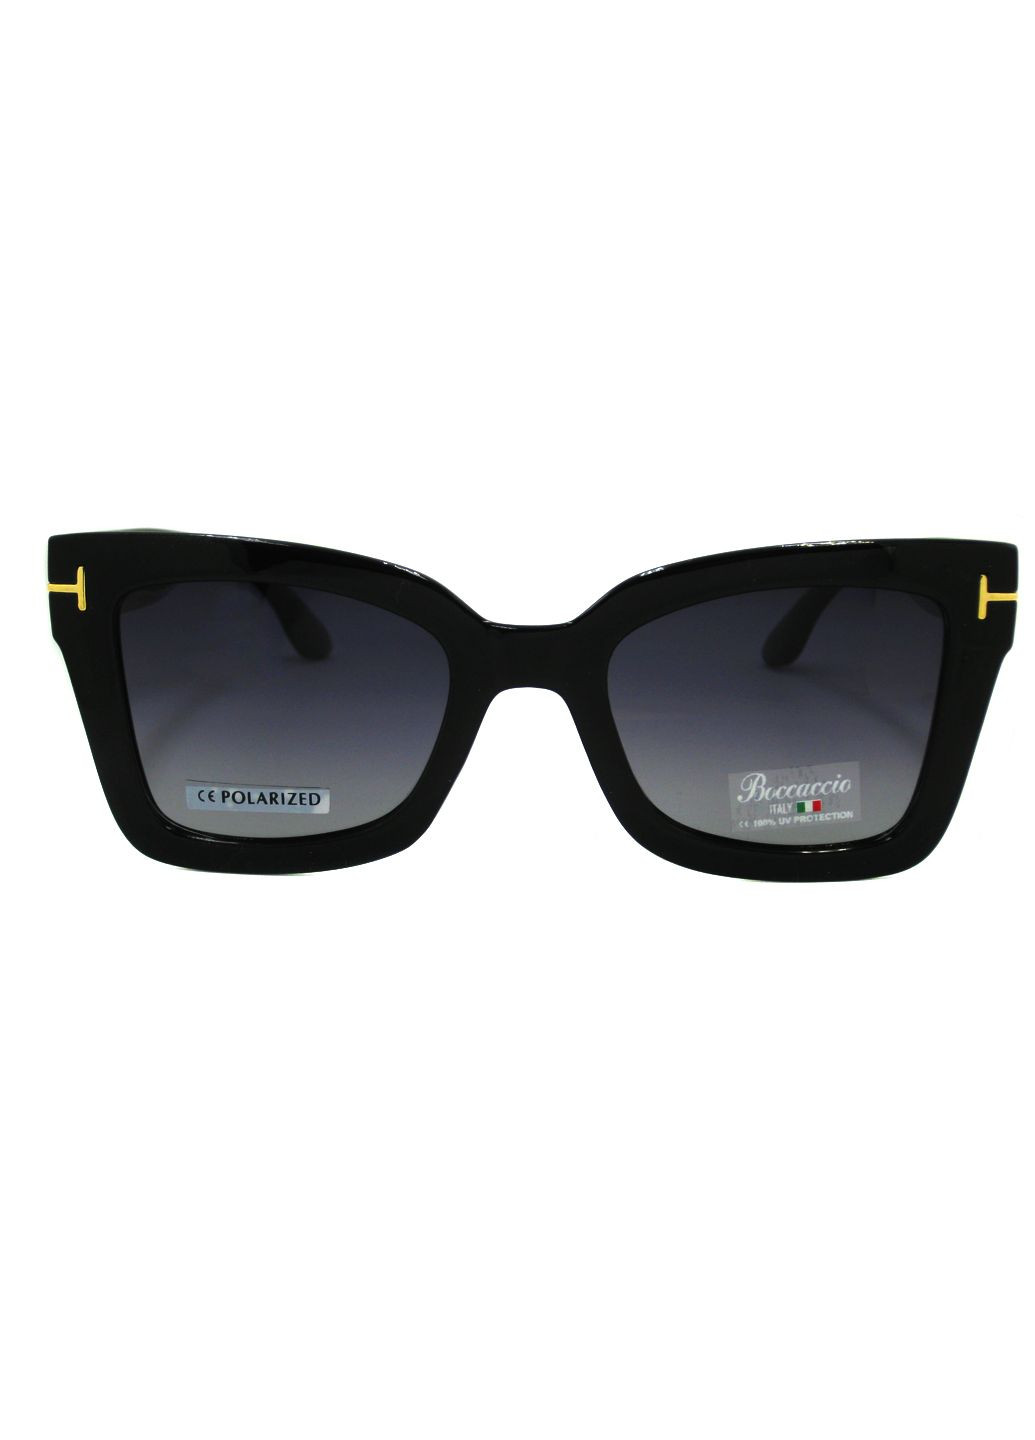 Сонцезахиснi окуляри Boccaccio bcplk2712 (284105726)